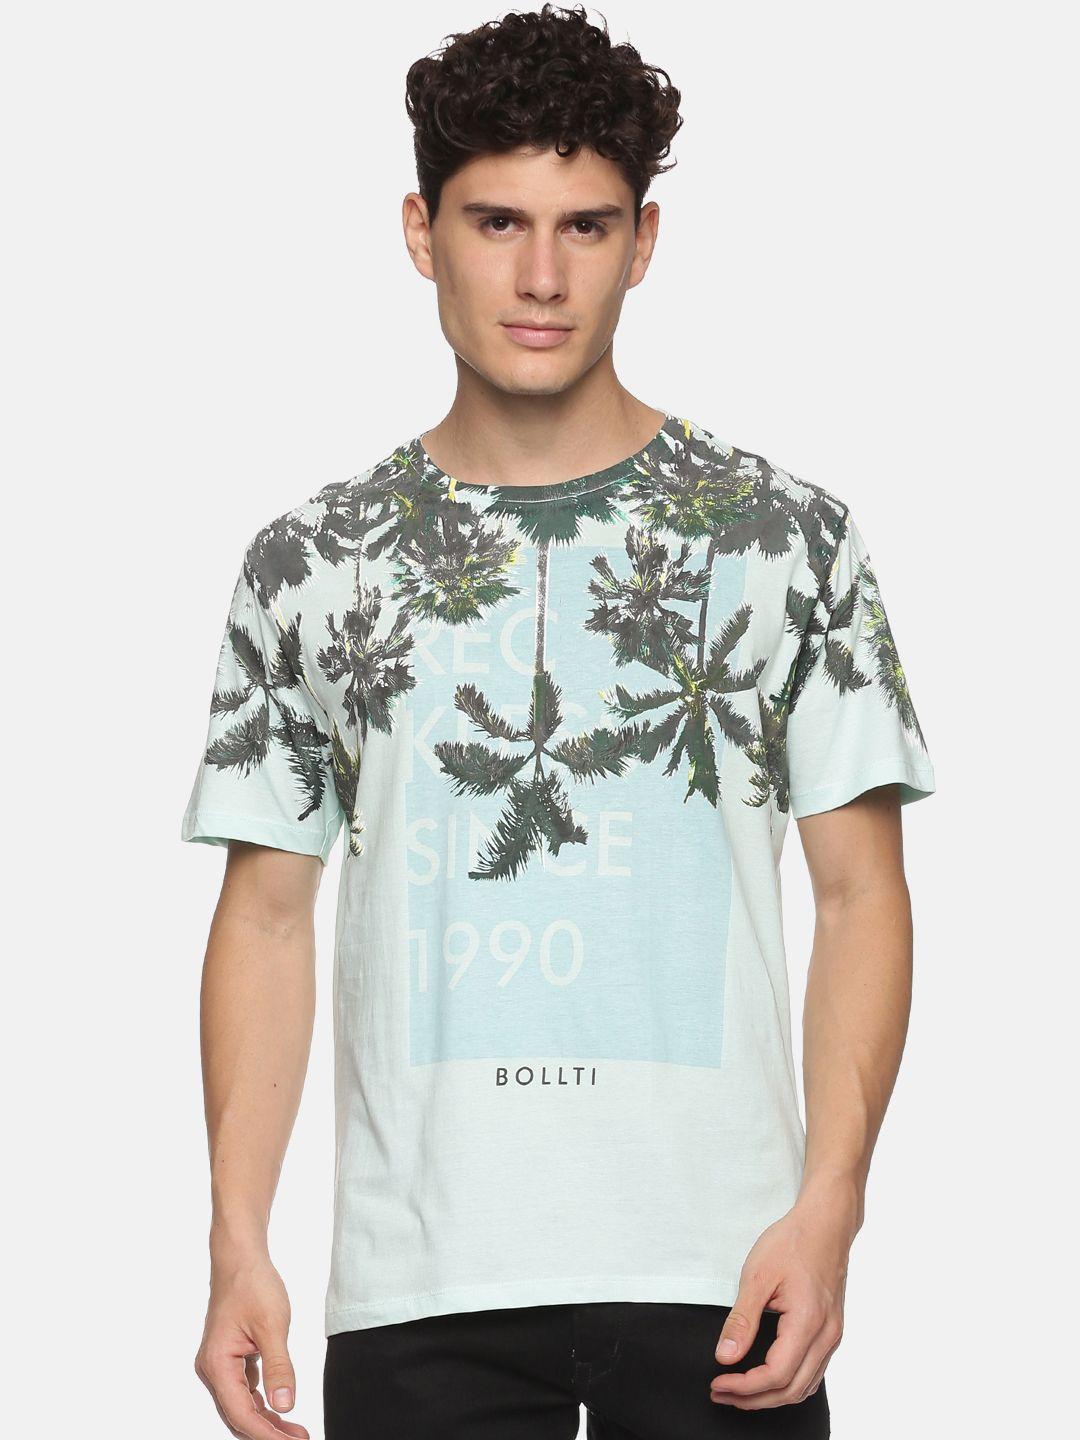 bollti tropical printed cotton t-shirt